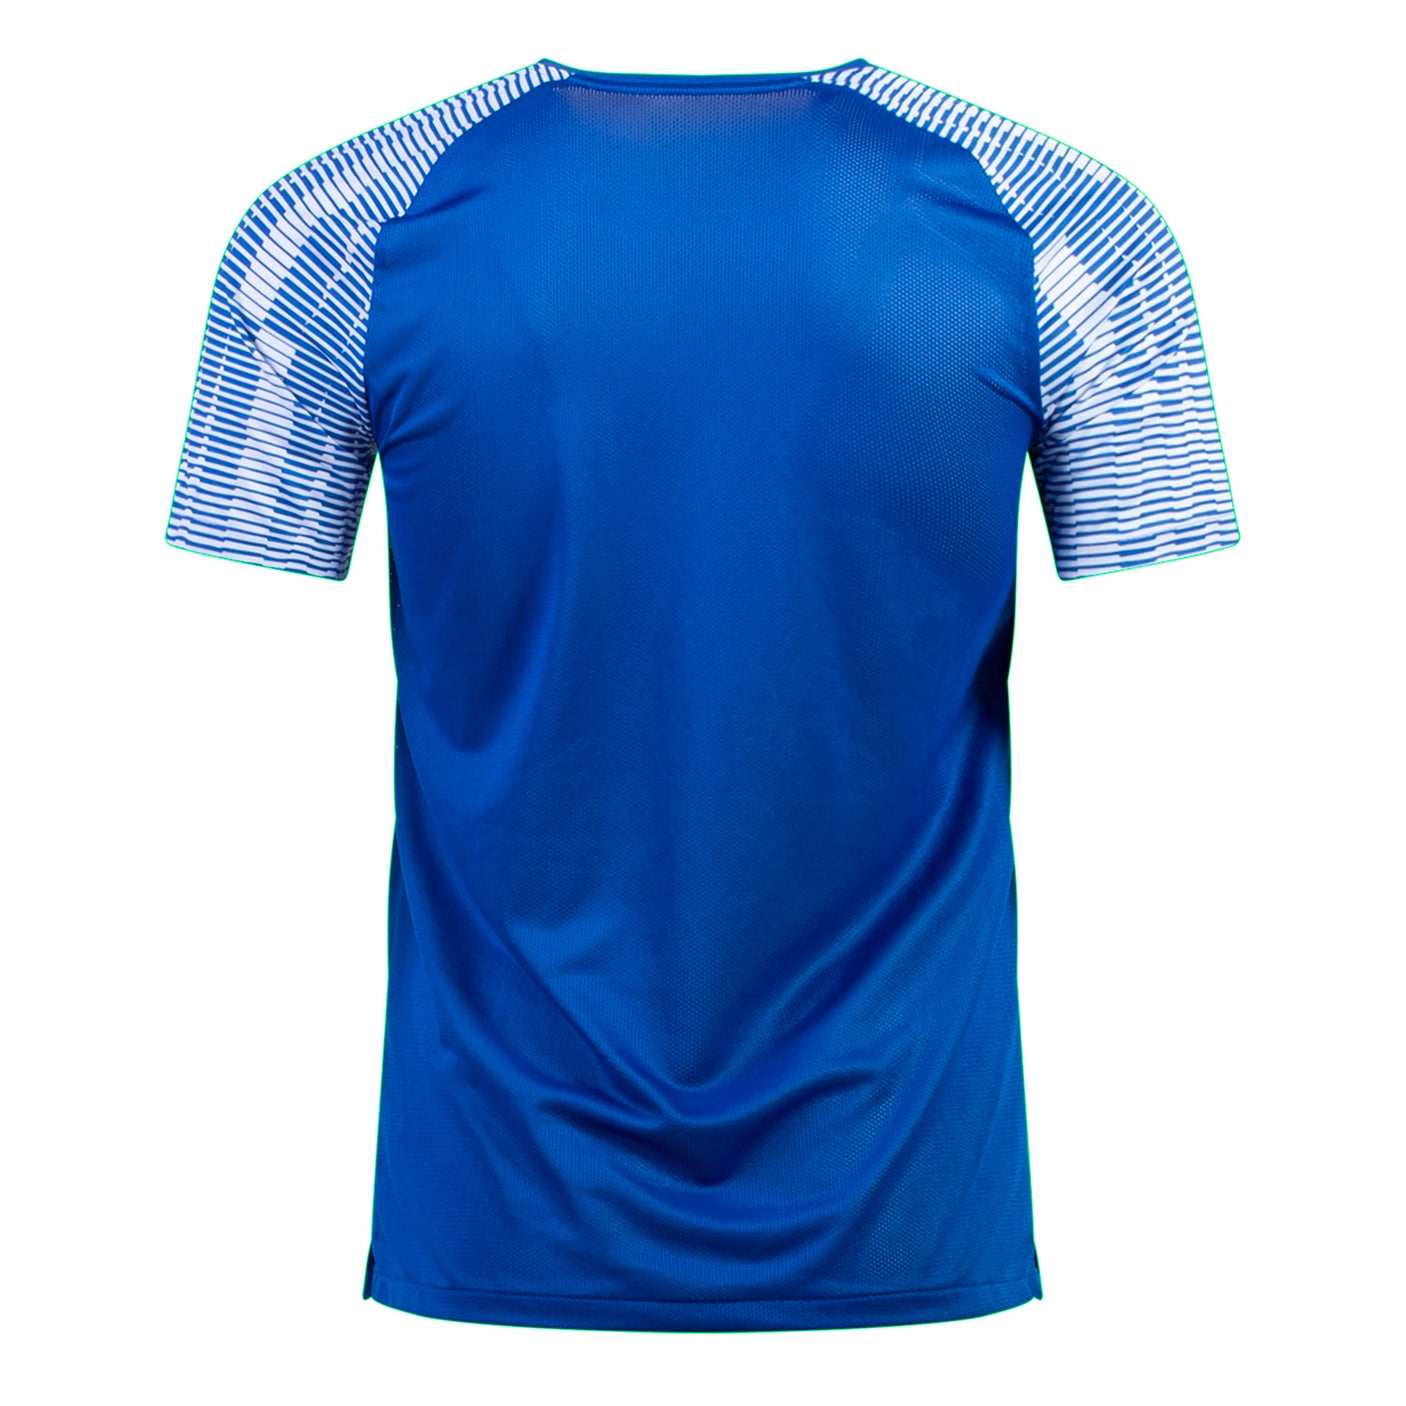 Nike Men's Academy Jersey Royal Blue/White Back